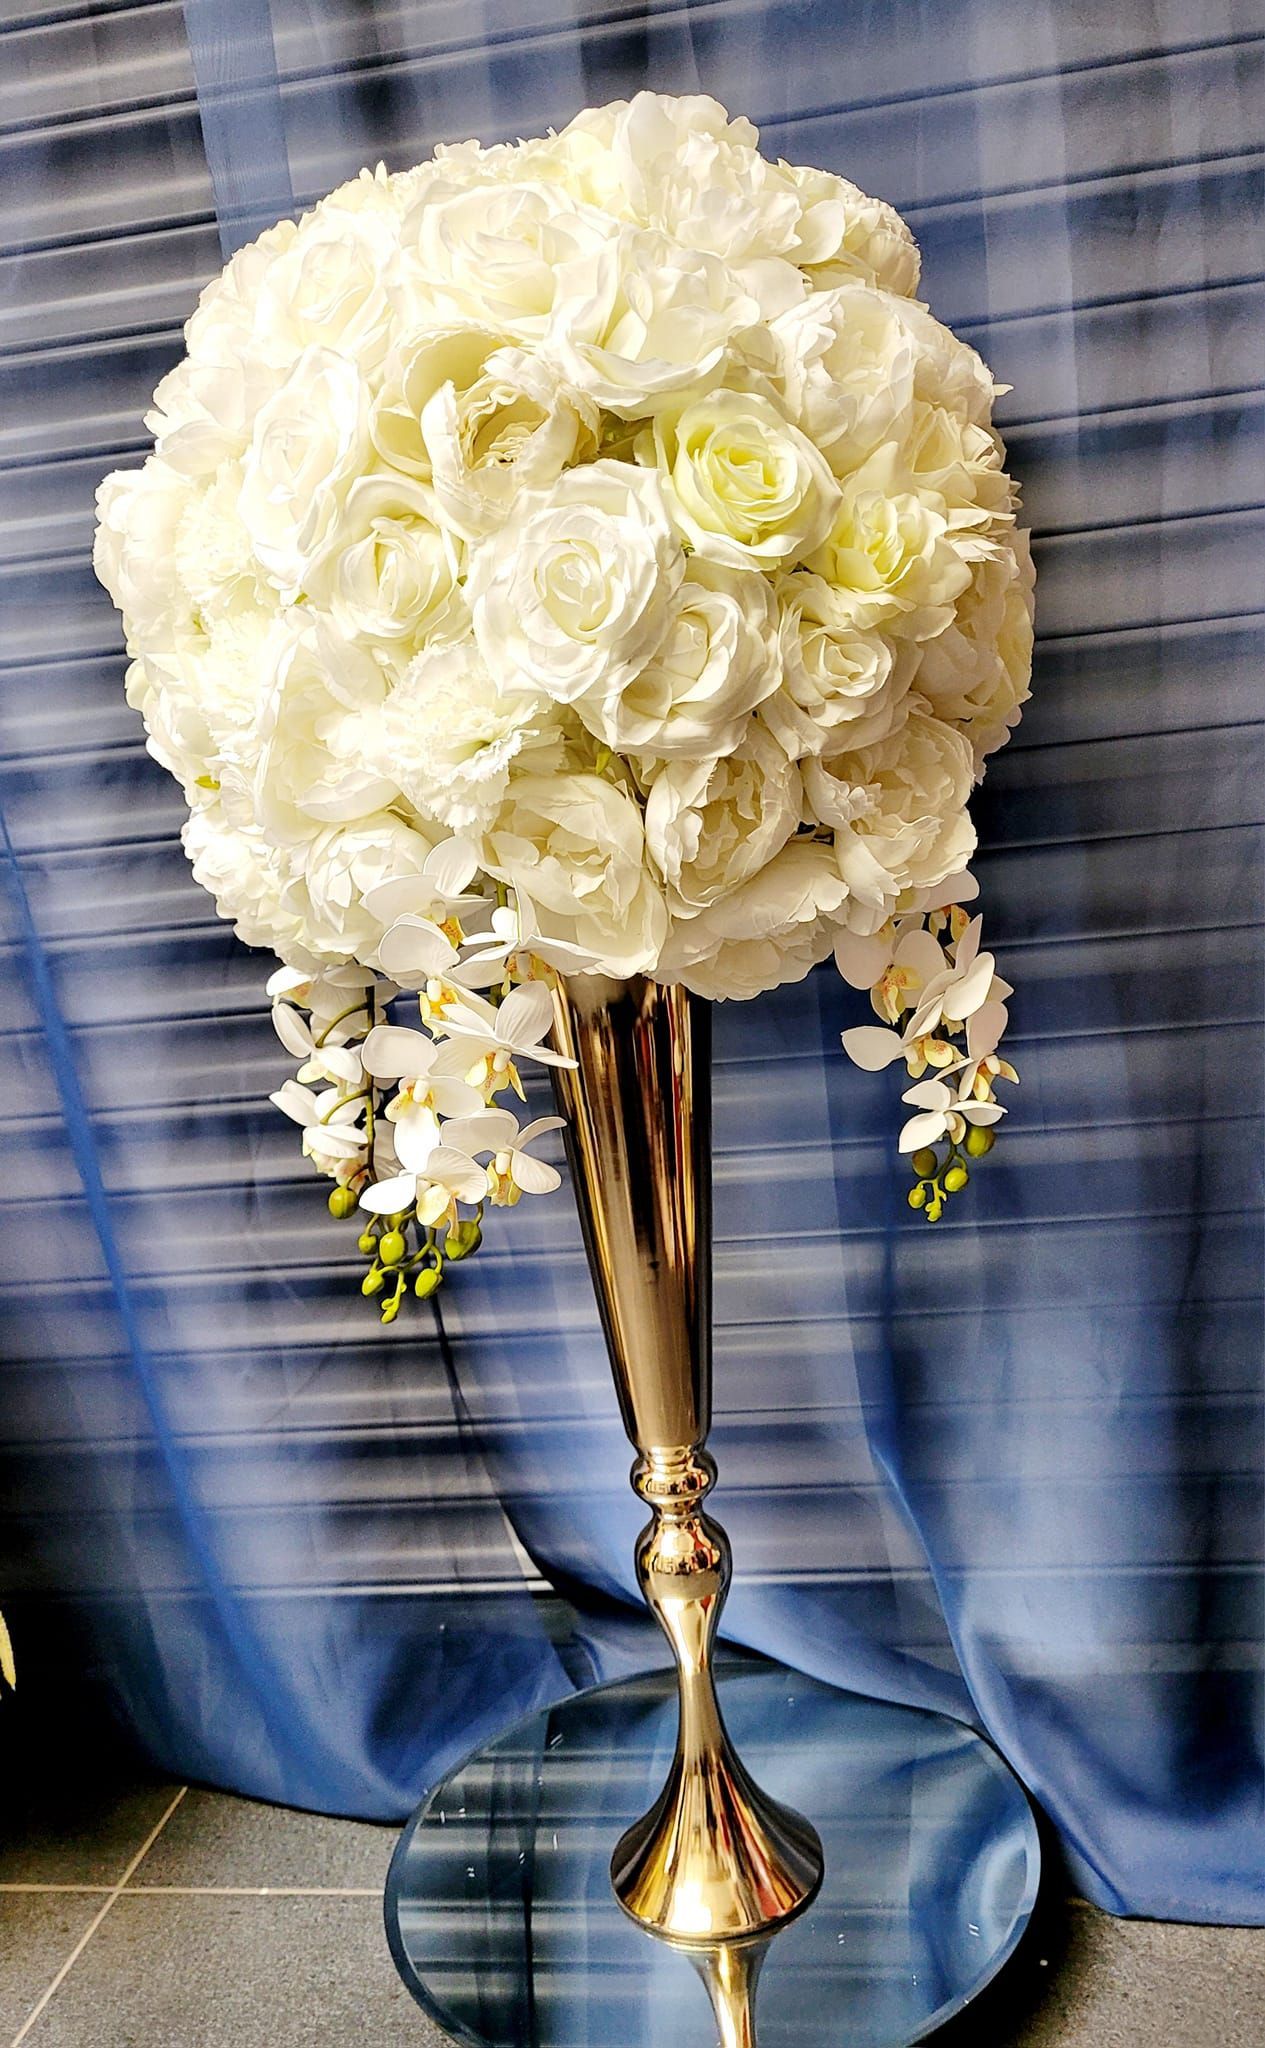 Gold trumpet vase with large flower ball arrangement